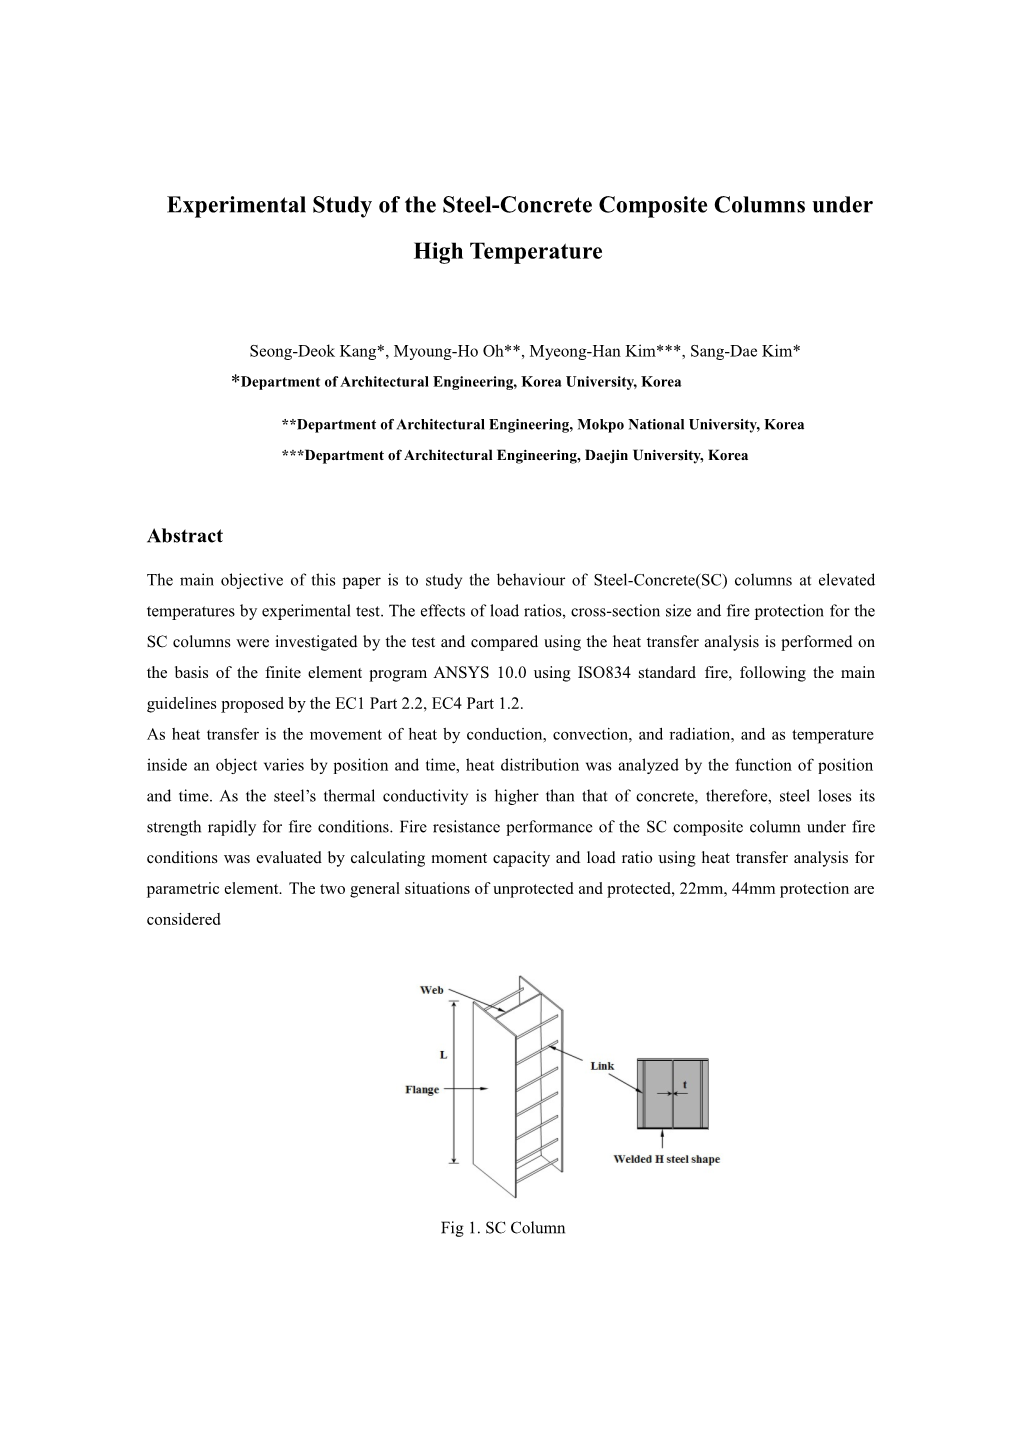 Experimental Study of the Steel-Concrete Composite Columns Under High Temperature